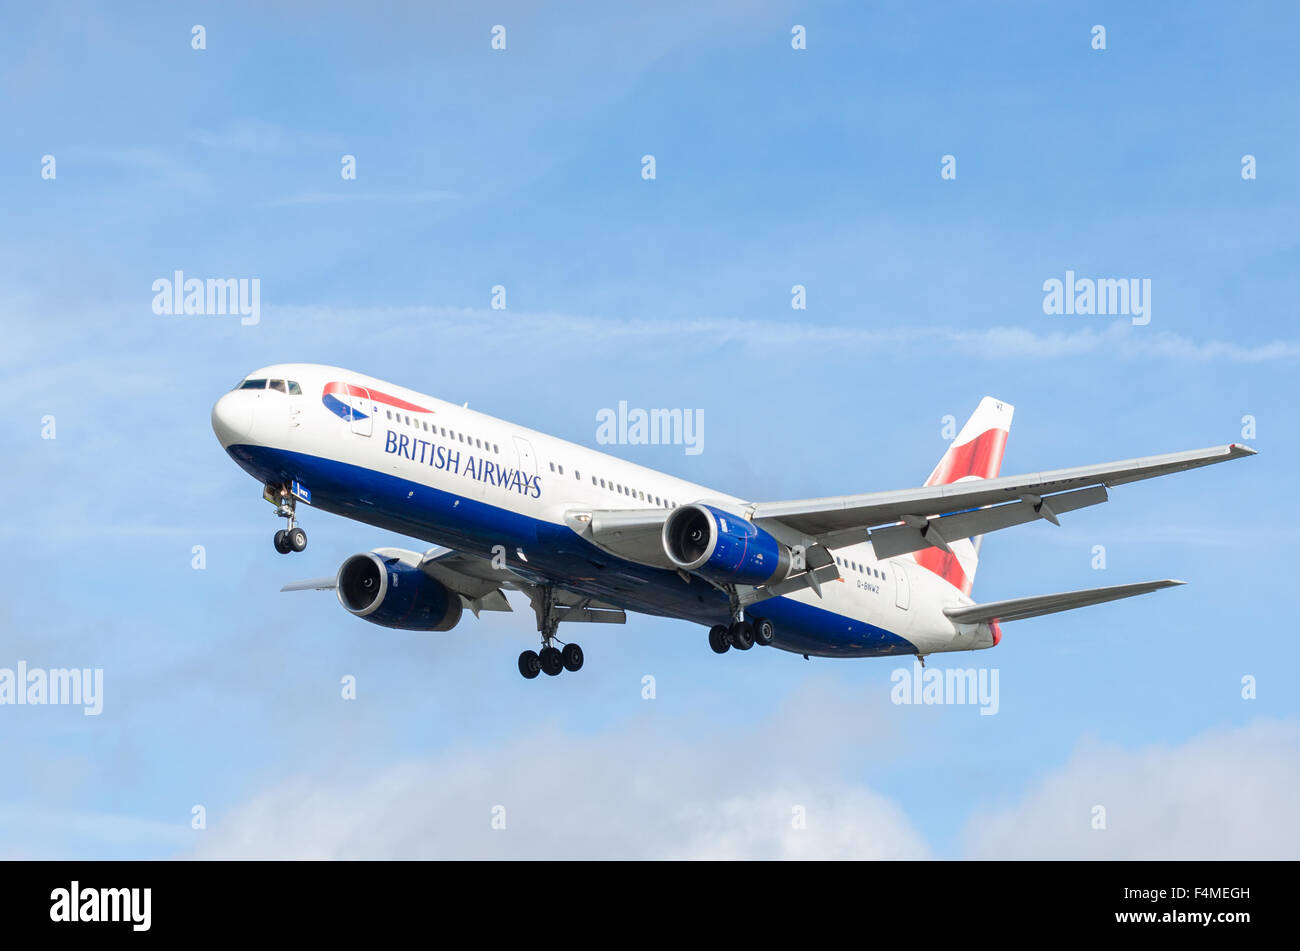 British Airways Boeing 767-300 in landing configuration at London Heathrow airport Stock Photo